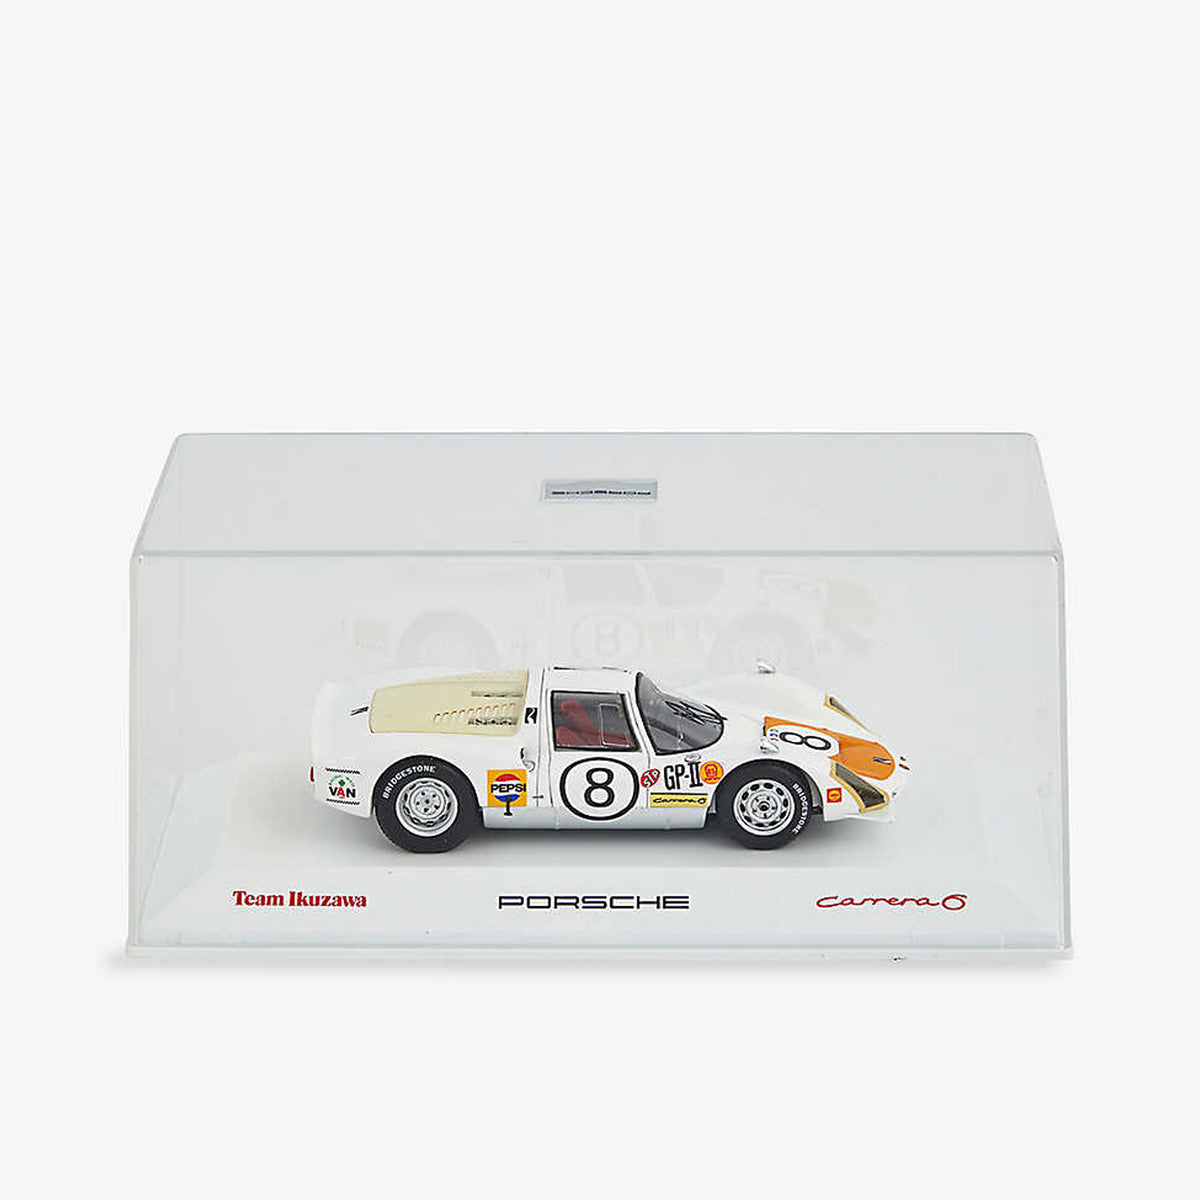 1967 Japan GP Winner Tetsu Ikuzawa Porsche Carrera 6 (906-145) 1:43  (Numbered edition of 250)